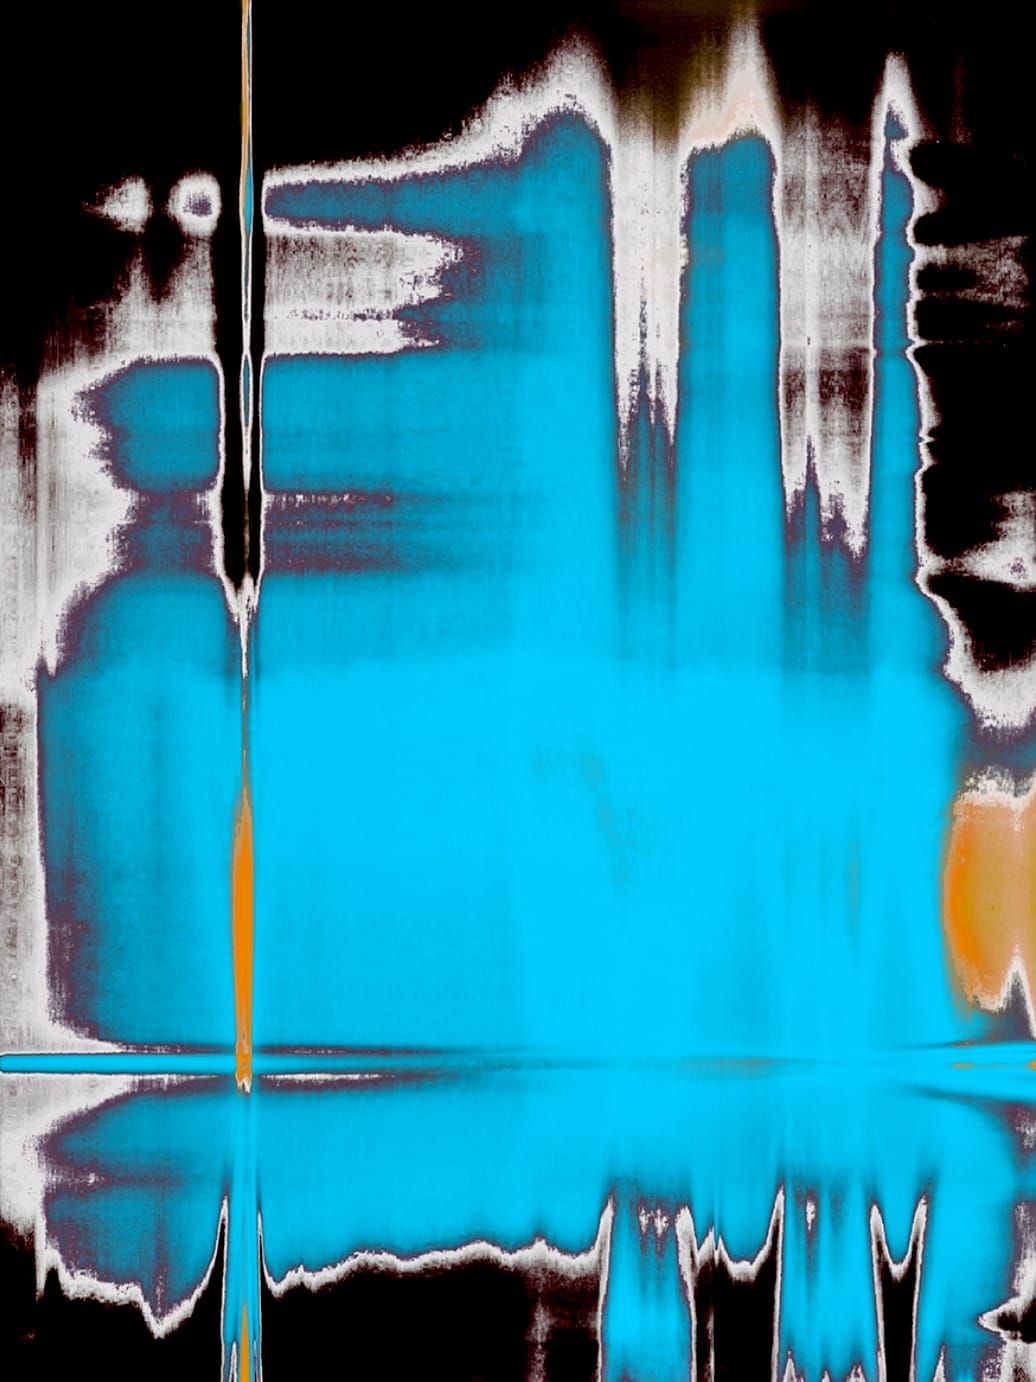 Fotografía, Scanography by Michael Monney aka acylmx, Imagen abstracta en azul